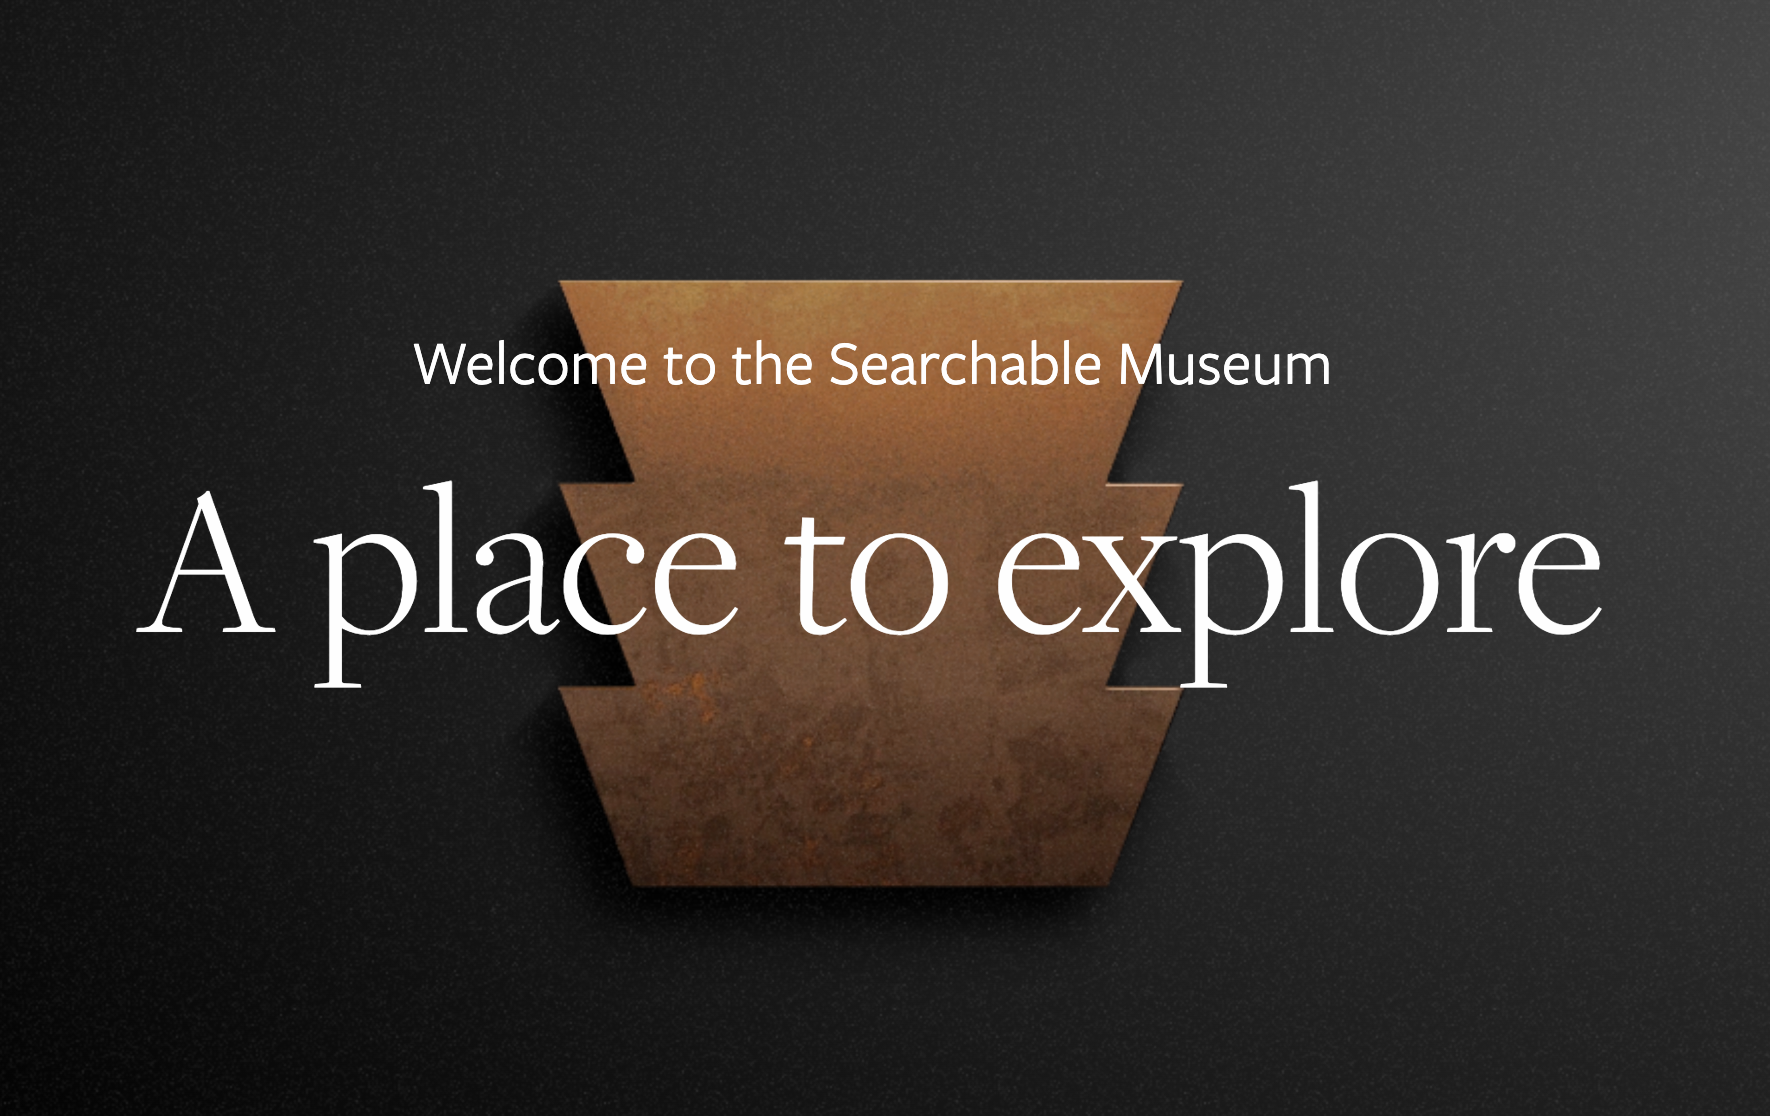 Searchable museum splash image